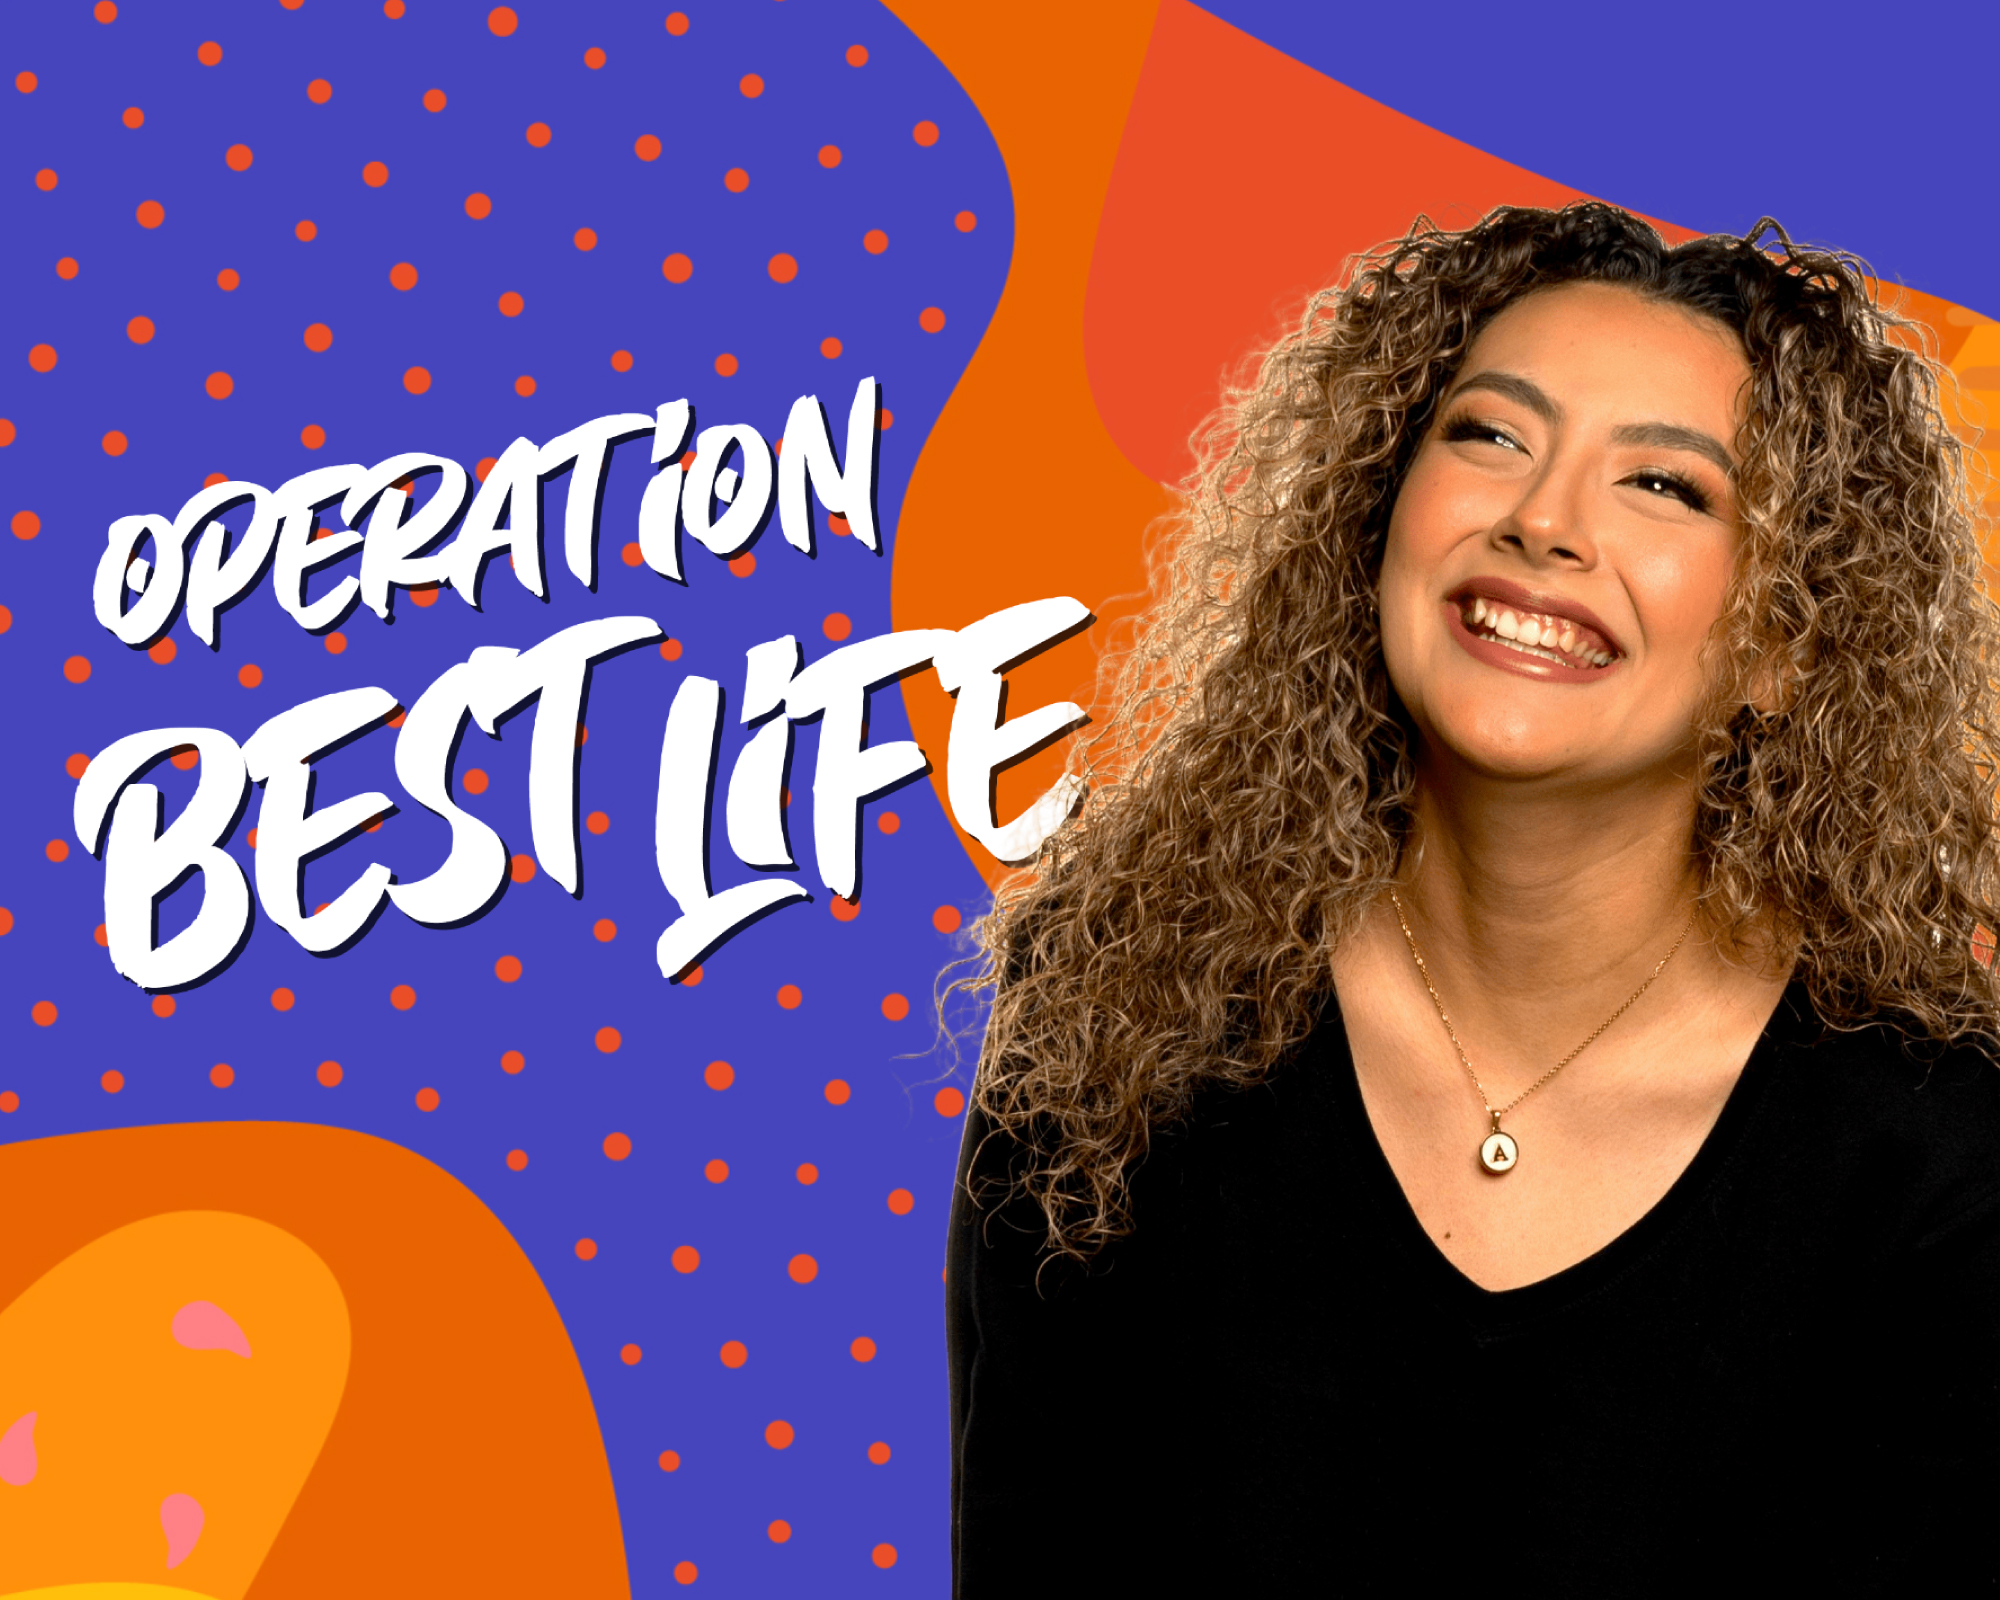 Heritage University's Operation Best Life, digital creative campaign